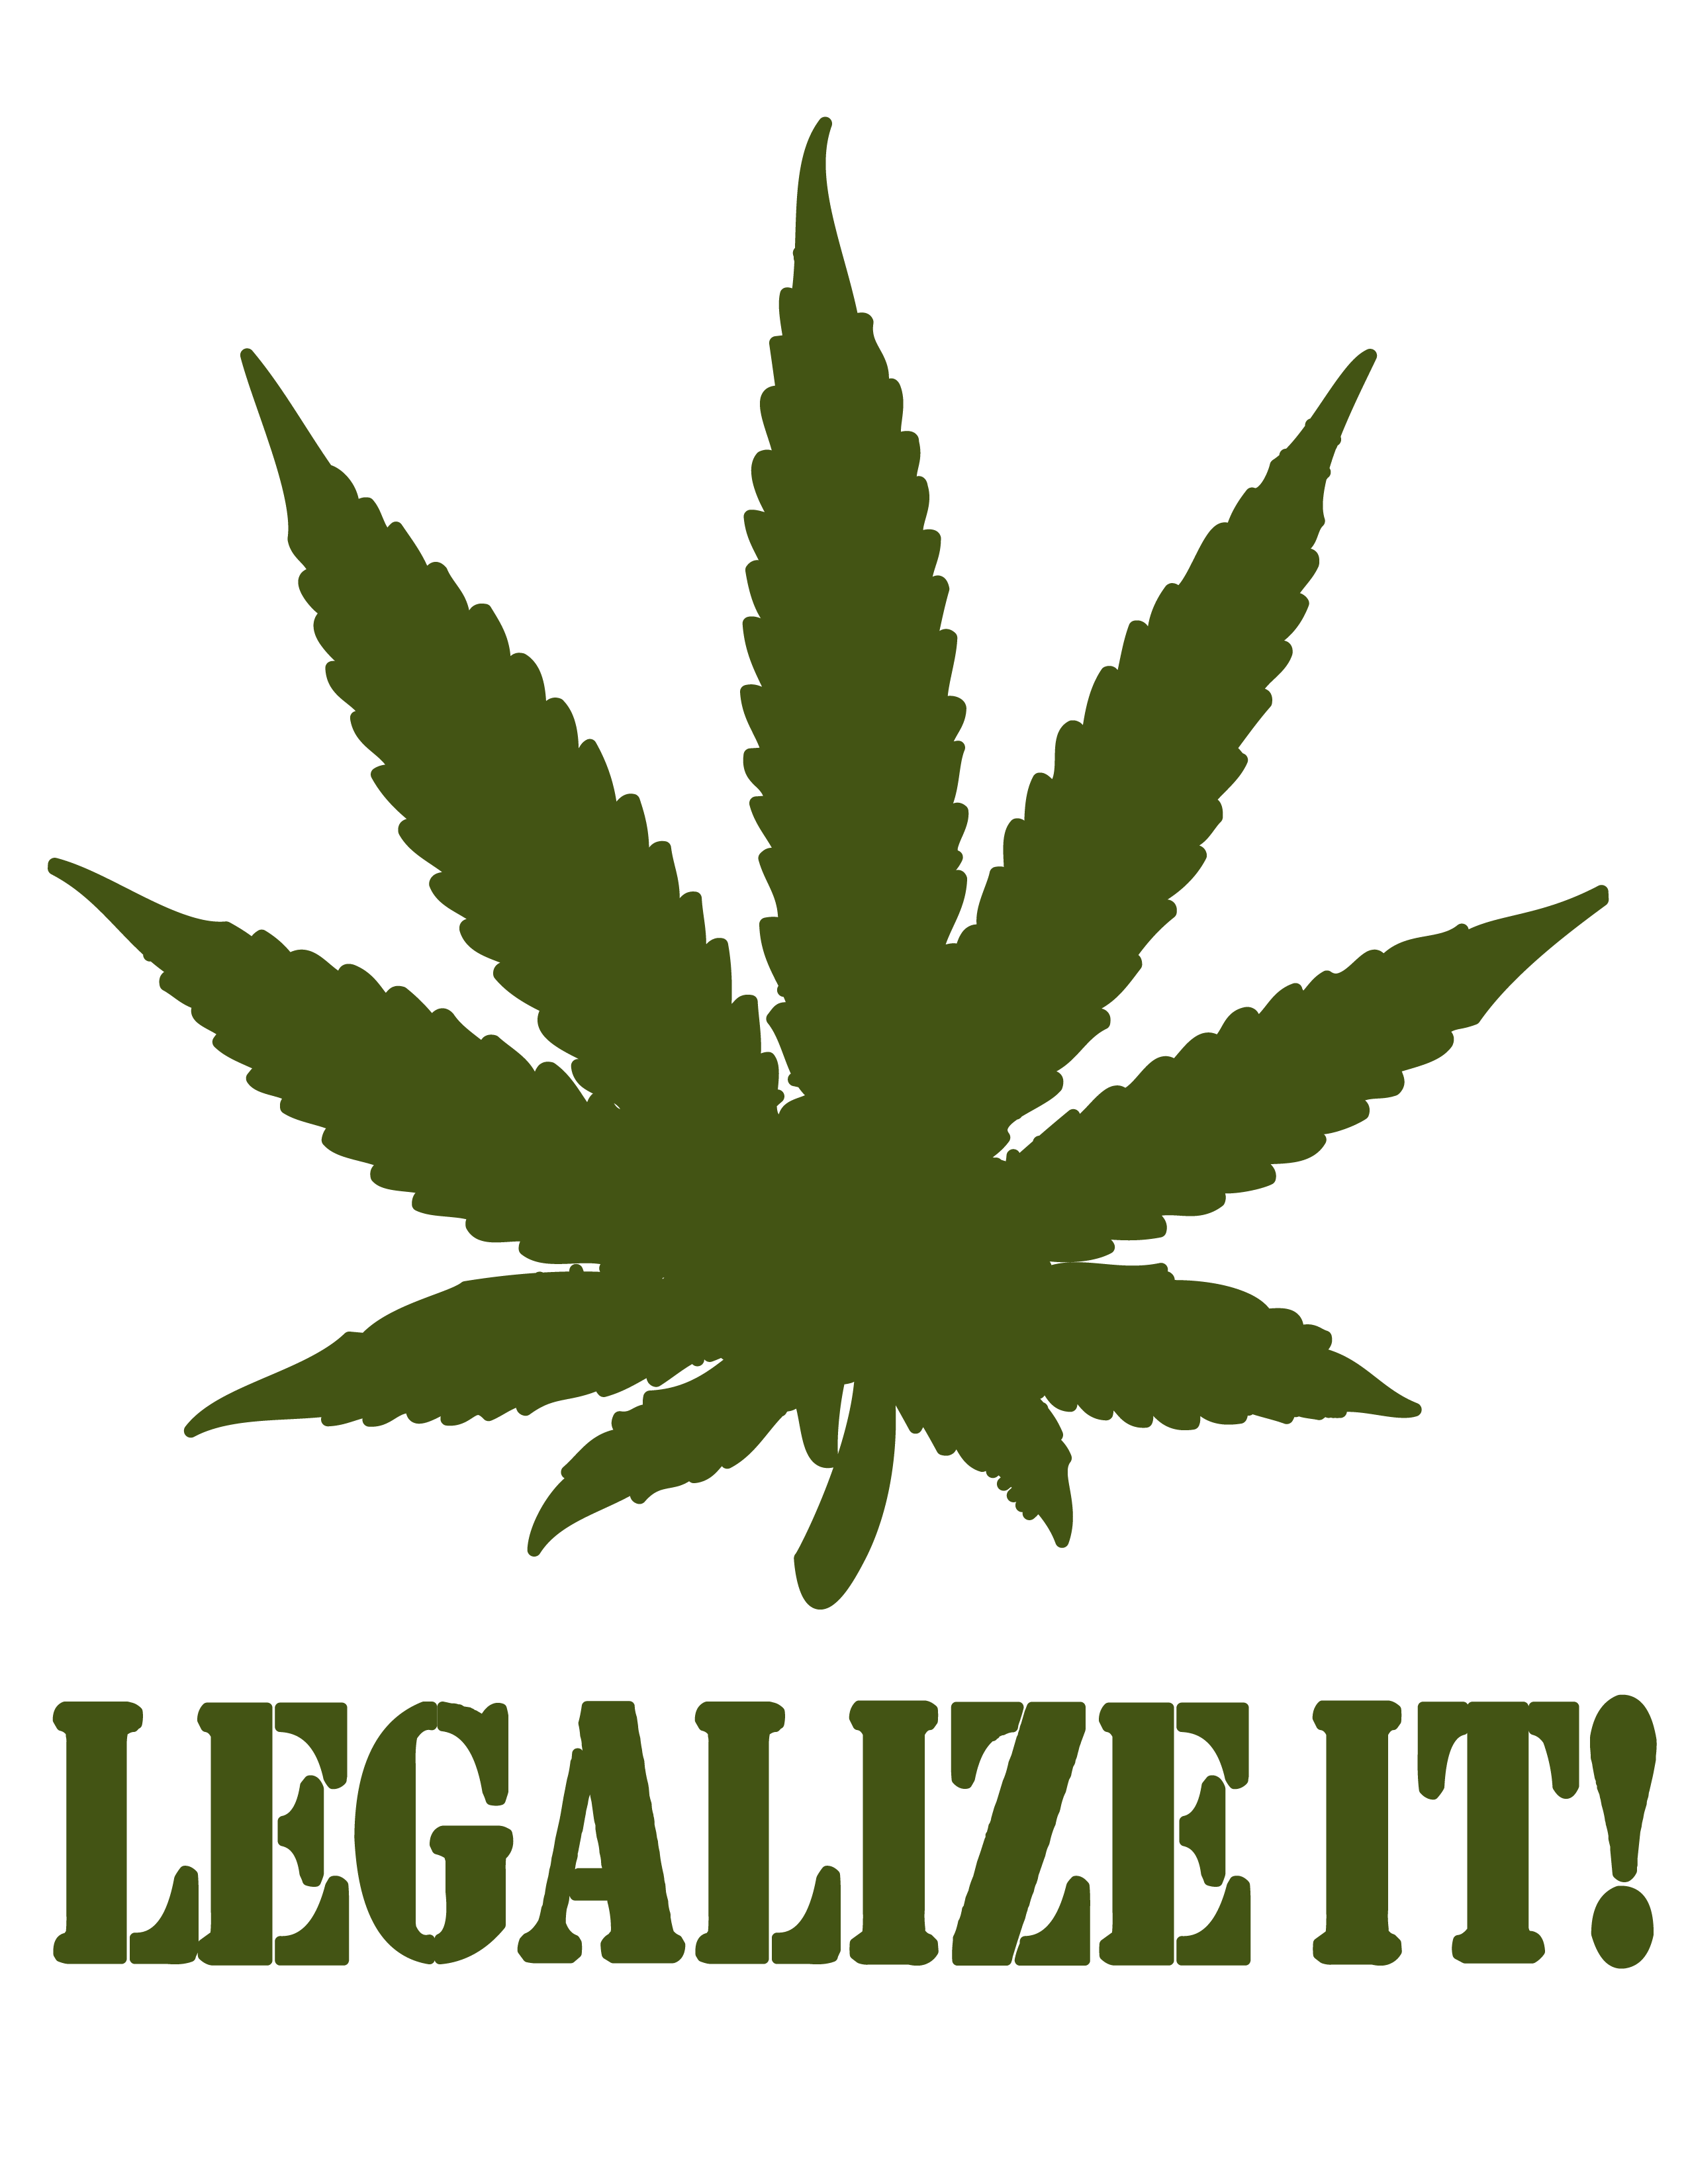 Legalize it Poster